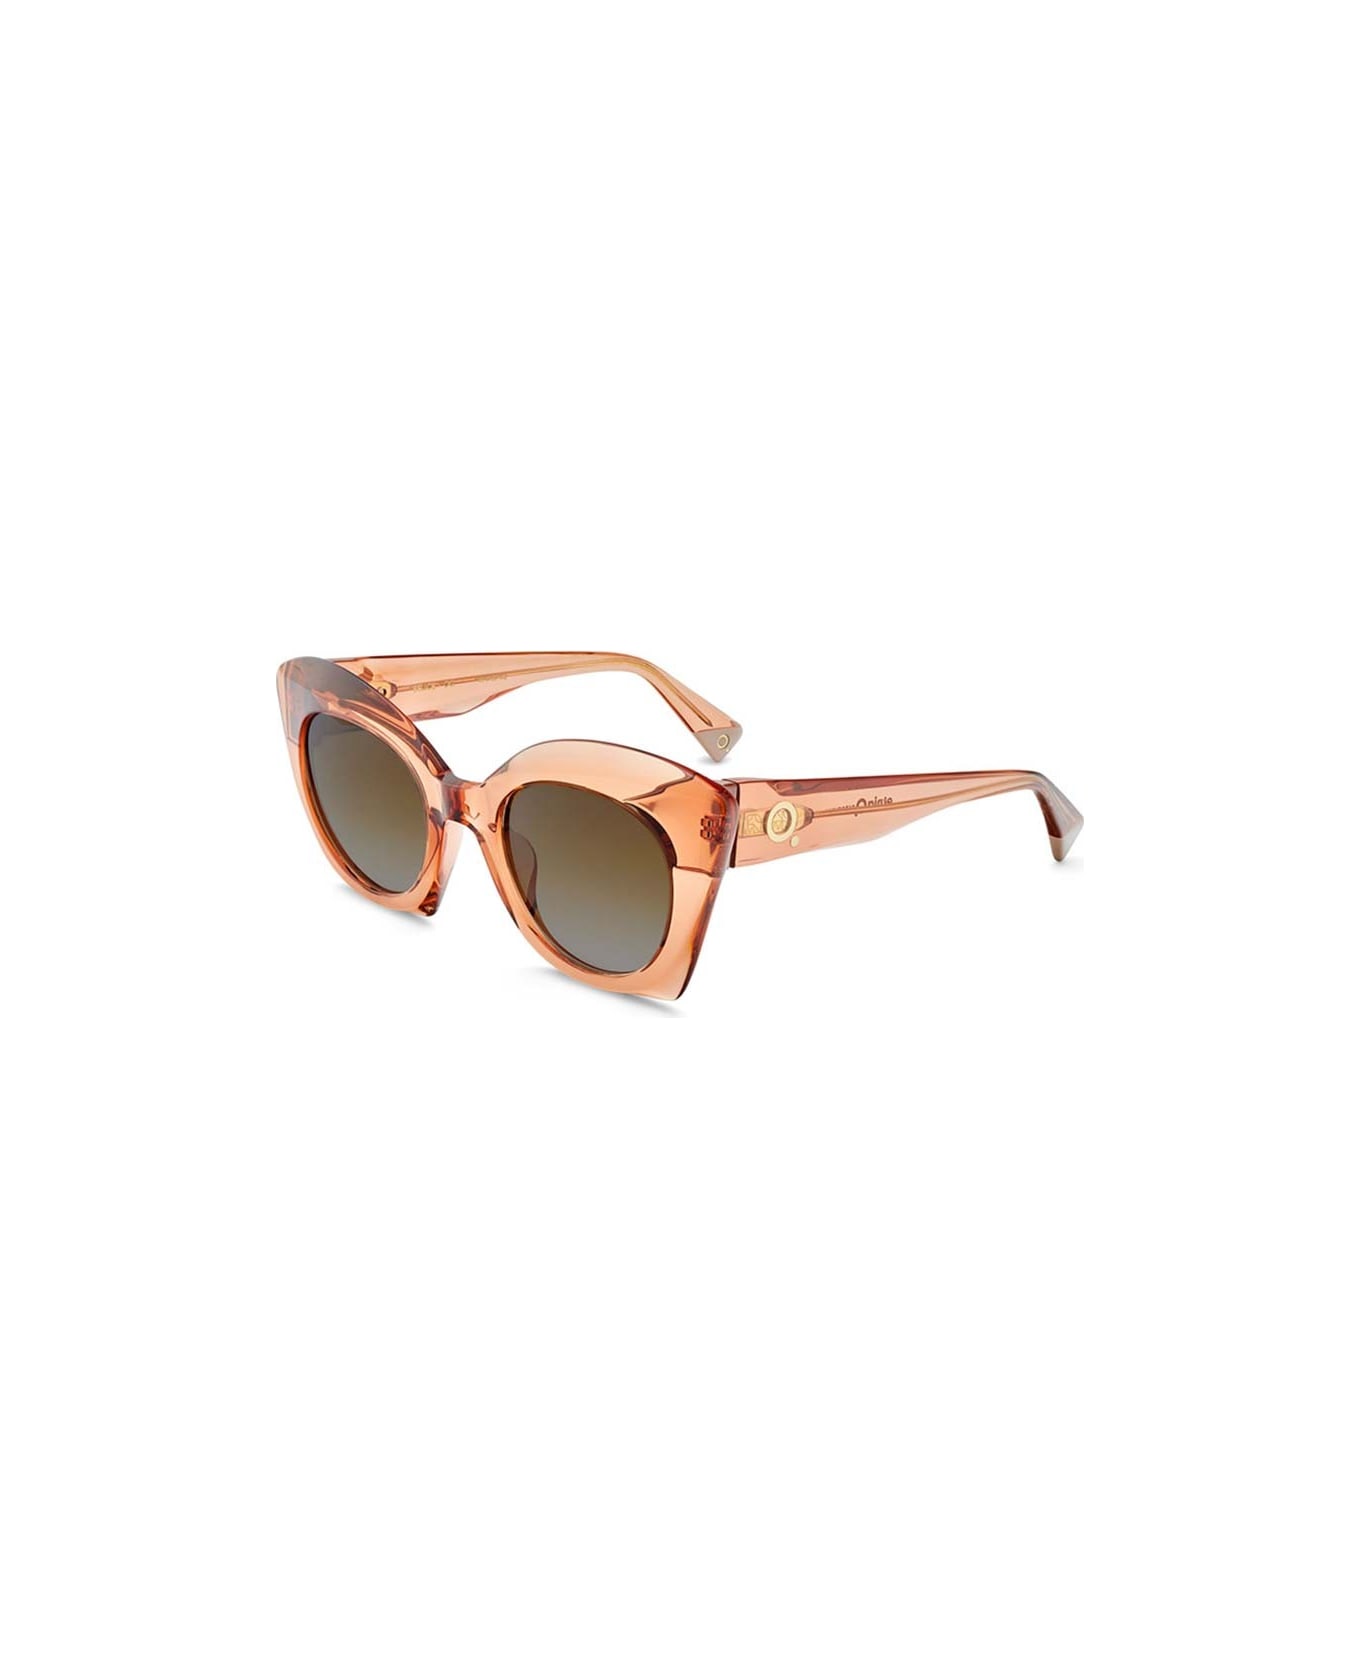 Etnia Barcelona Sunglasses - Arancione/Marrone サングラス